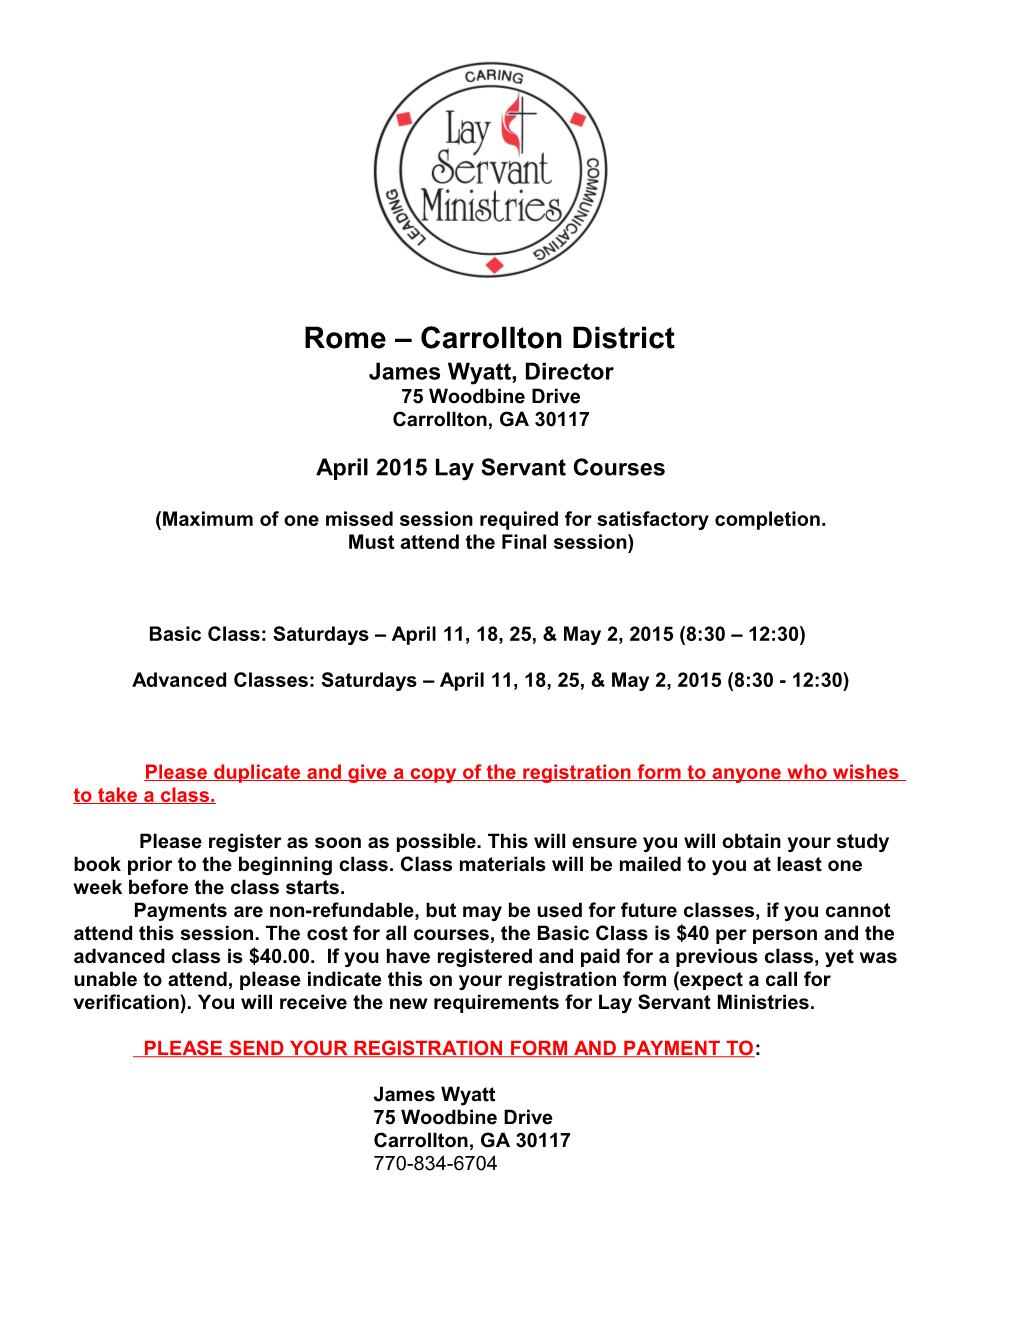 Rome Carrollton District s1